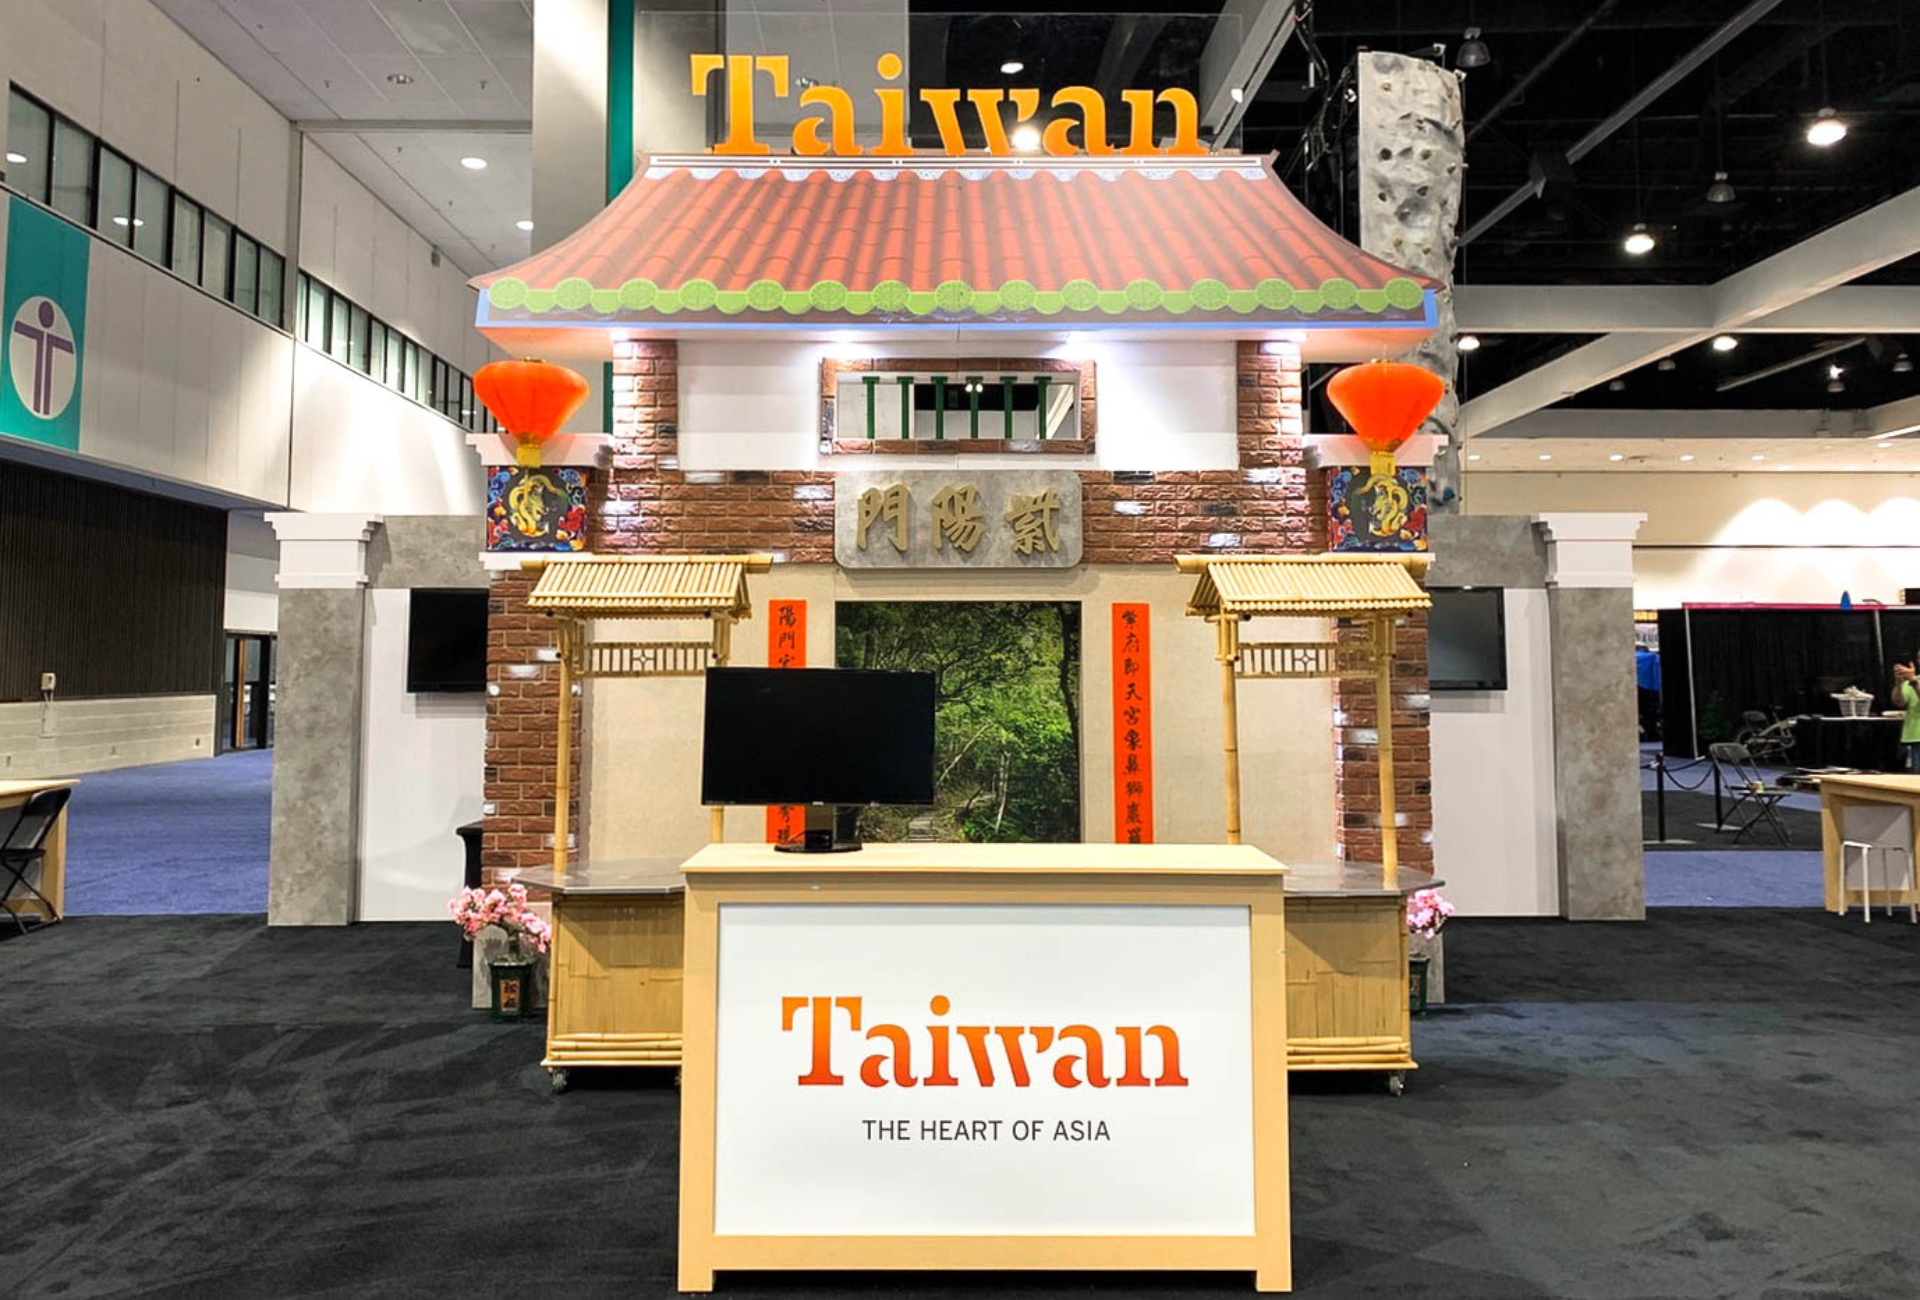 Taiwan Pavilion at Travel & Adventure Show 2020